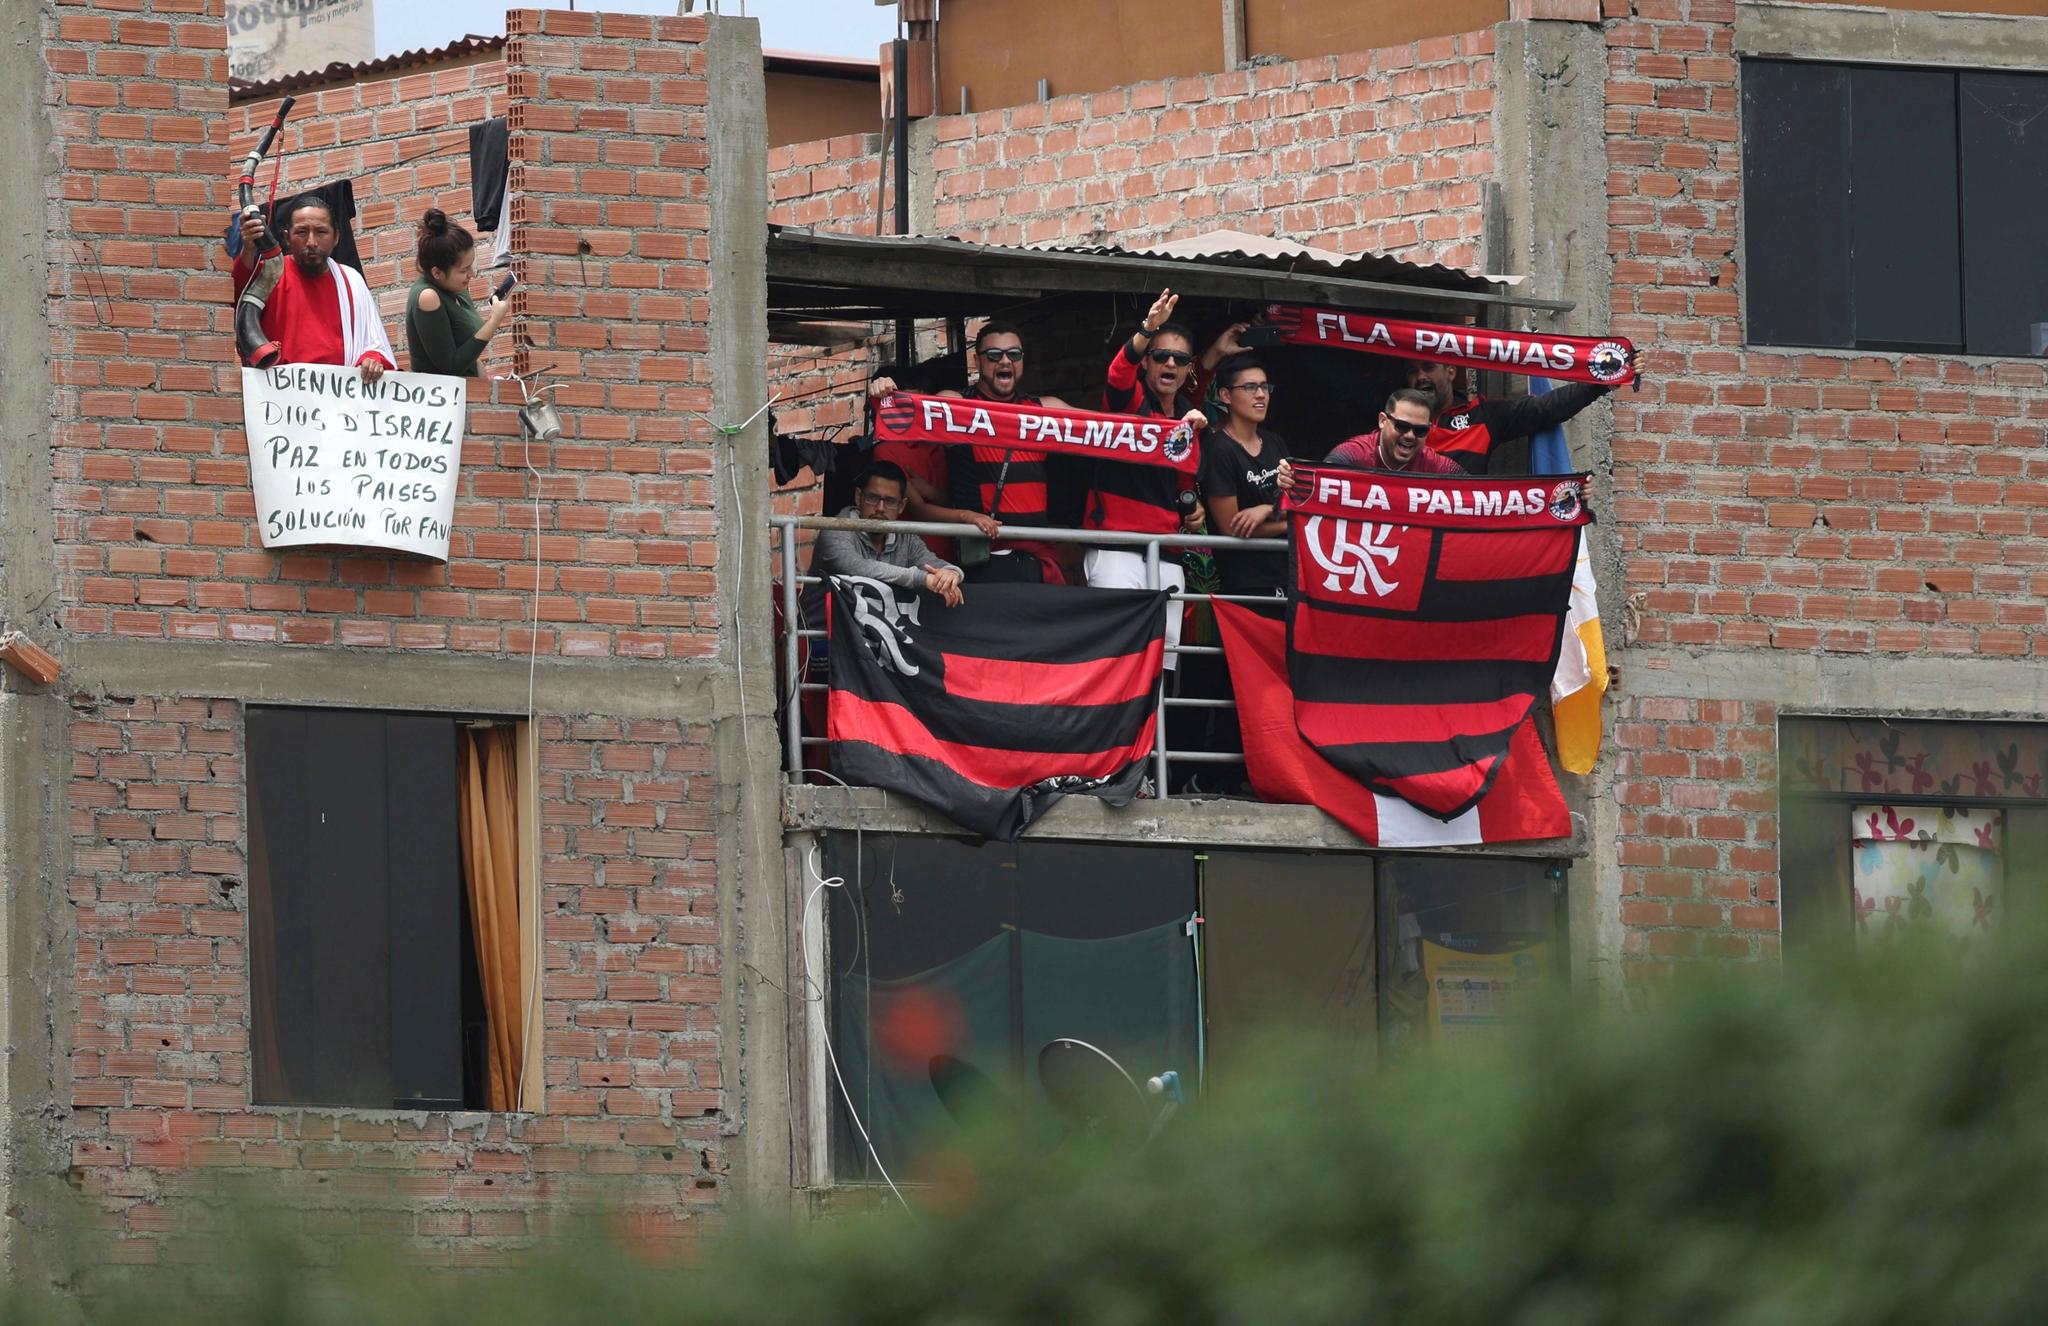 Conmebol patrocina triste espetáculo que submete torcedores de Flamengo e River ao sofrimento